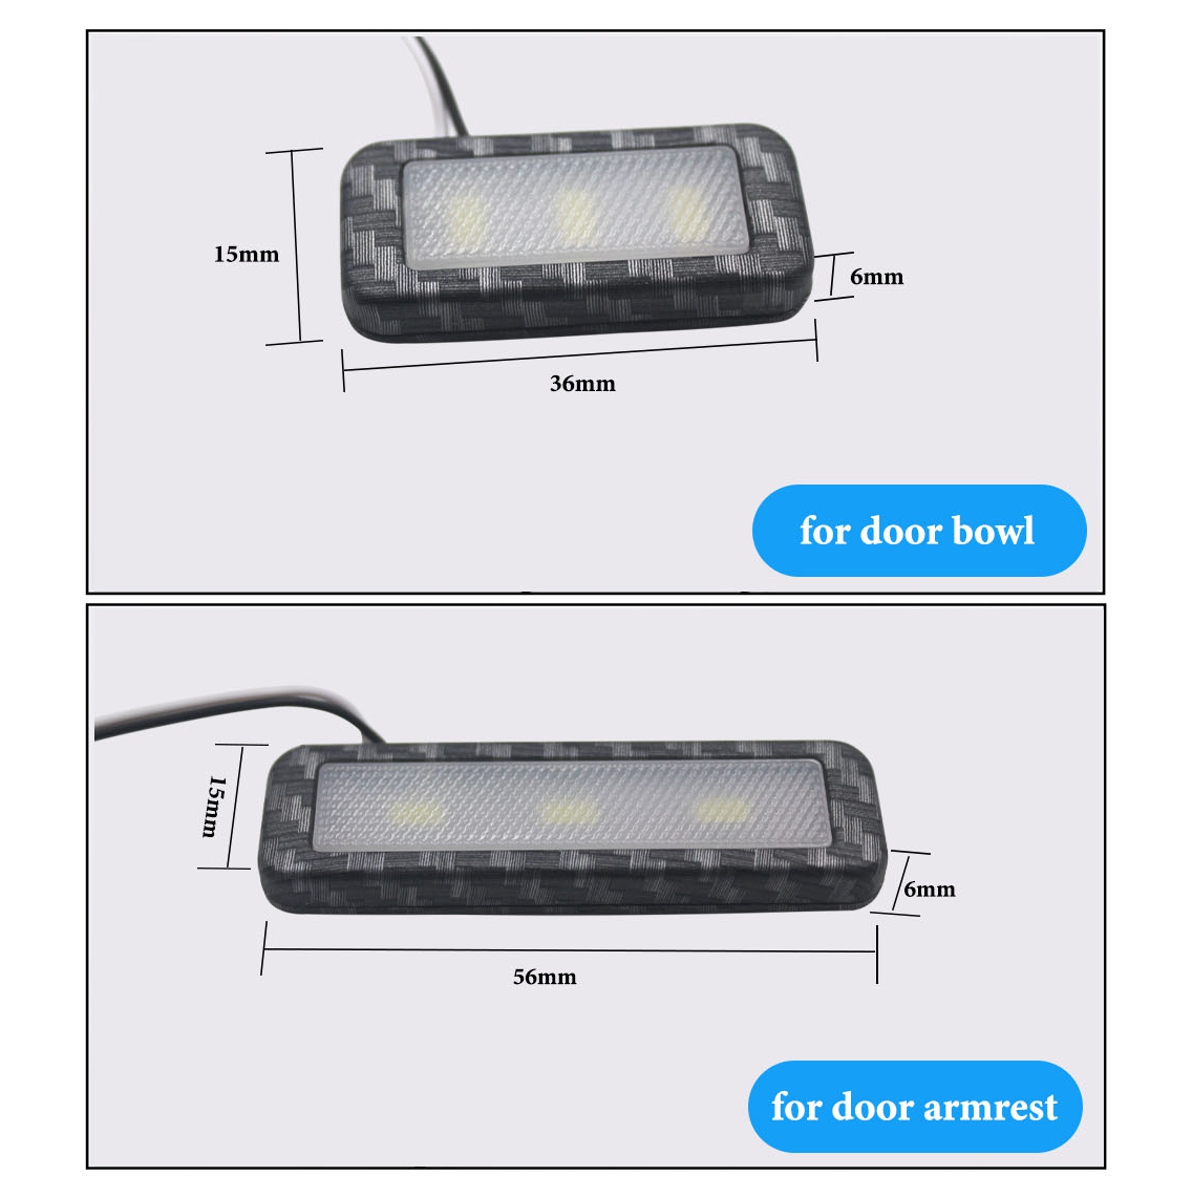 4PCS LED Car Inner Bowl Light Interior Door Handle Armrest Lights Decorative Lamp Handrail Lights Car Light